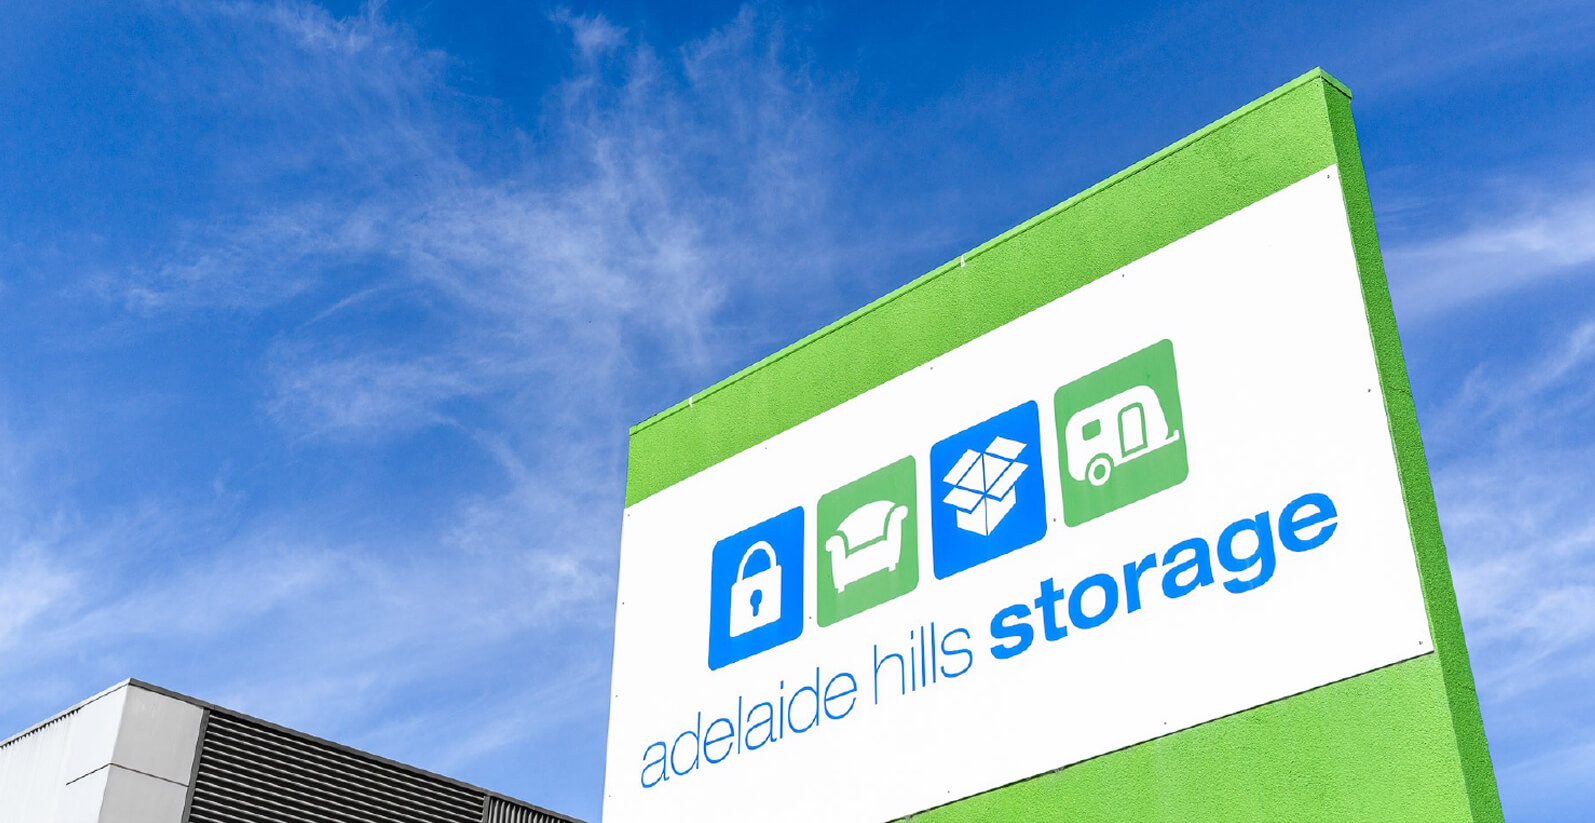 Sign for Adelaide Hills Storage